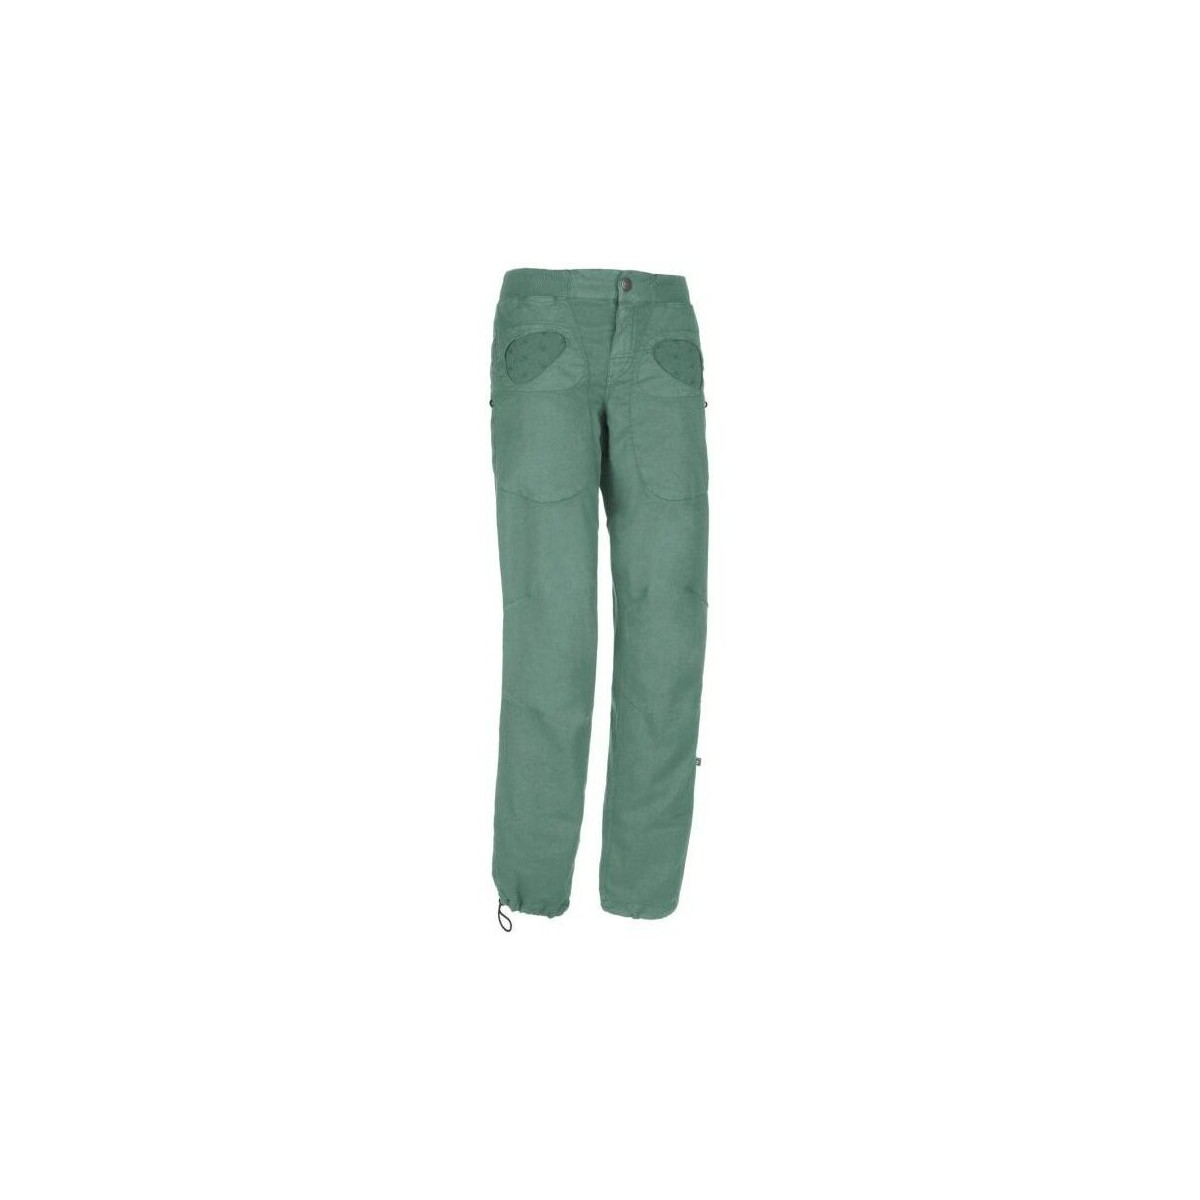 textil Mujer Pantalones de chándal E9 Pantalones Onda Flax Mujer Thymus Verde